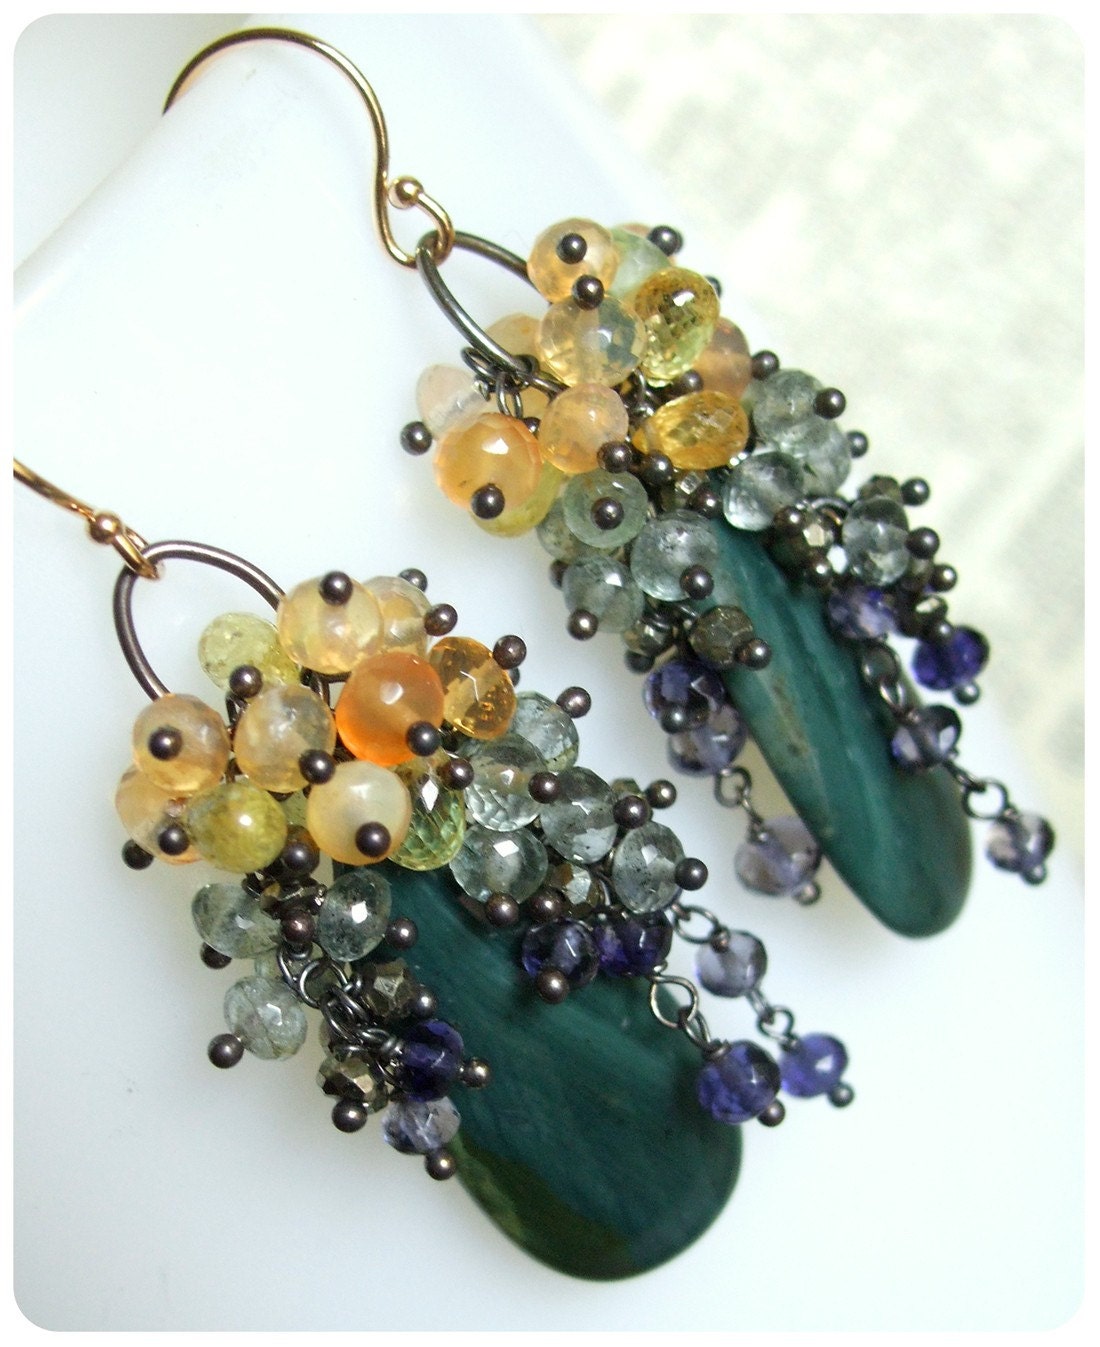 Laburnum earrings - Belle epoque - earrings